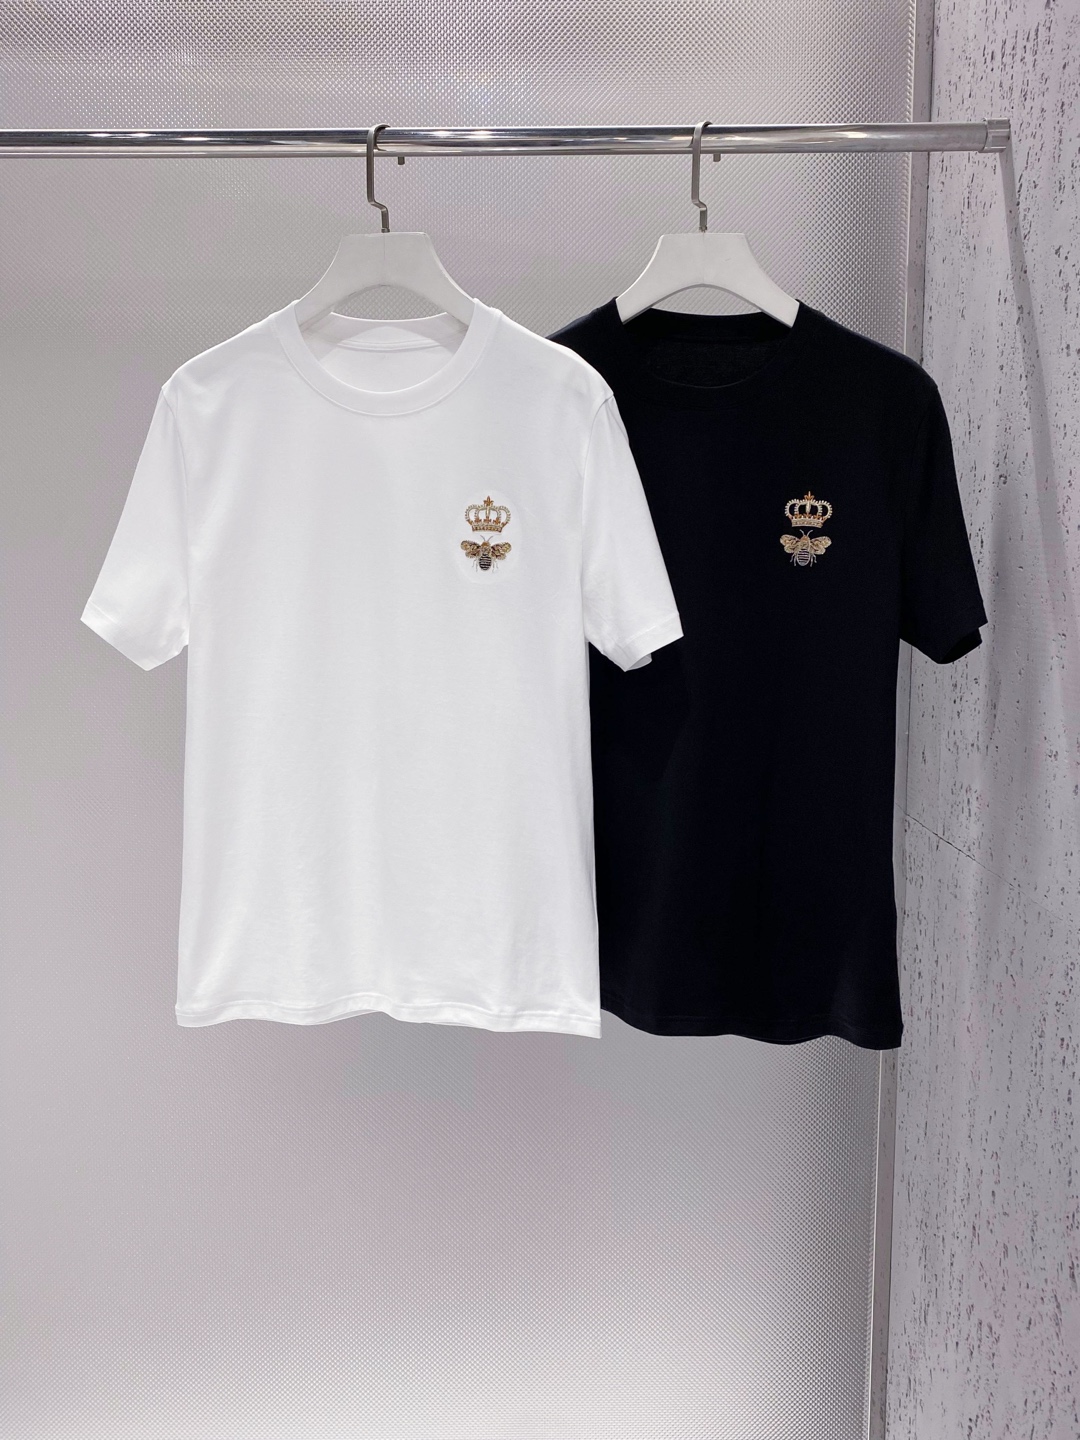 DG~皇冠蜜蜂刺绣圆领短袖T恤。二色集